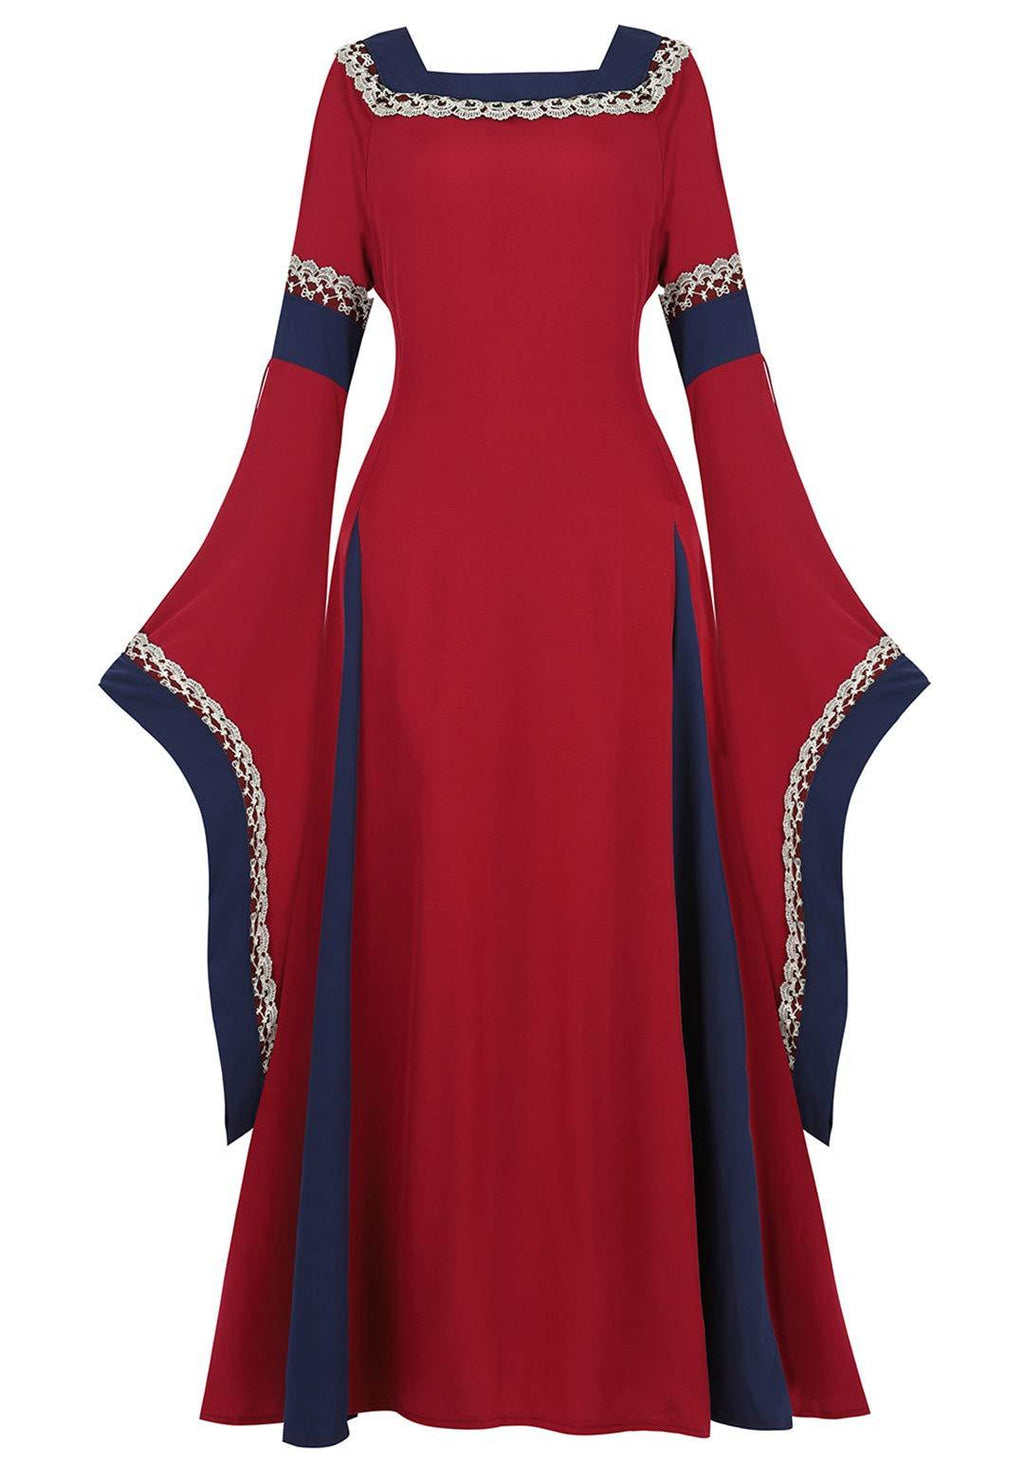 [Australia] - Kranchungel Womens Renaissance Medieval Dress Costume Irish Lace up Over Long Dress Retro Gown Cosplay X-Small Renaissance Dress Wine Red 